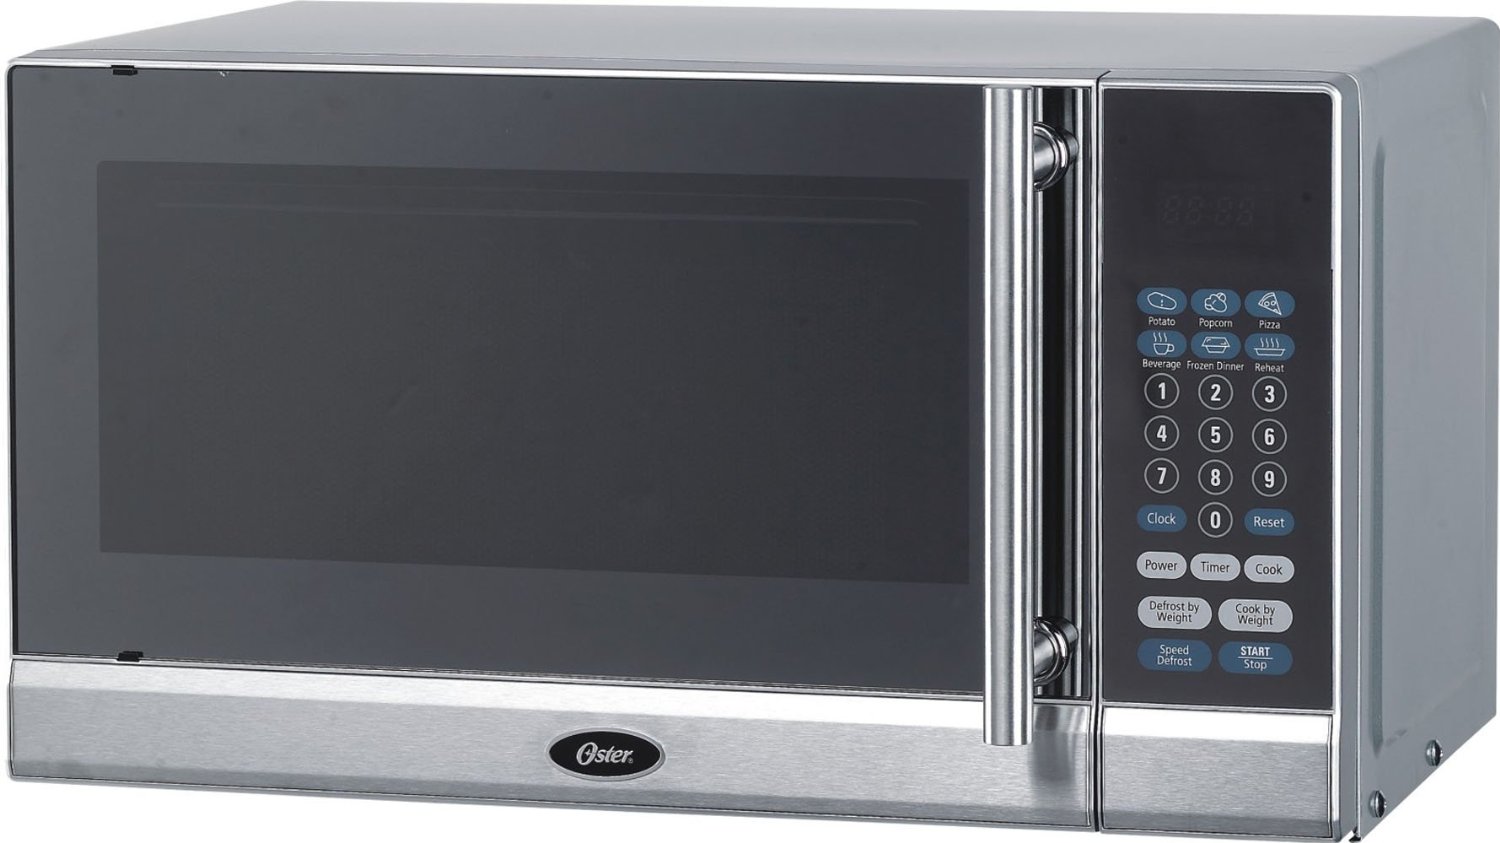 Oster Ogg3701 7 Cubic Foot 700 Watt Digital Microwave Oven